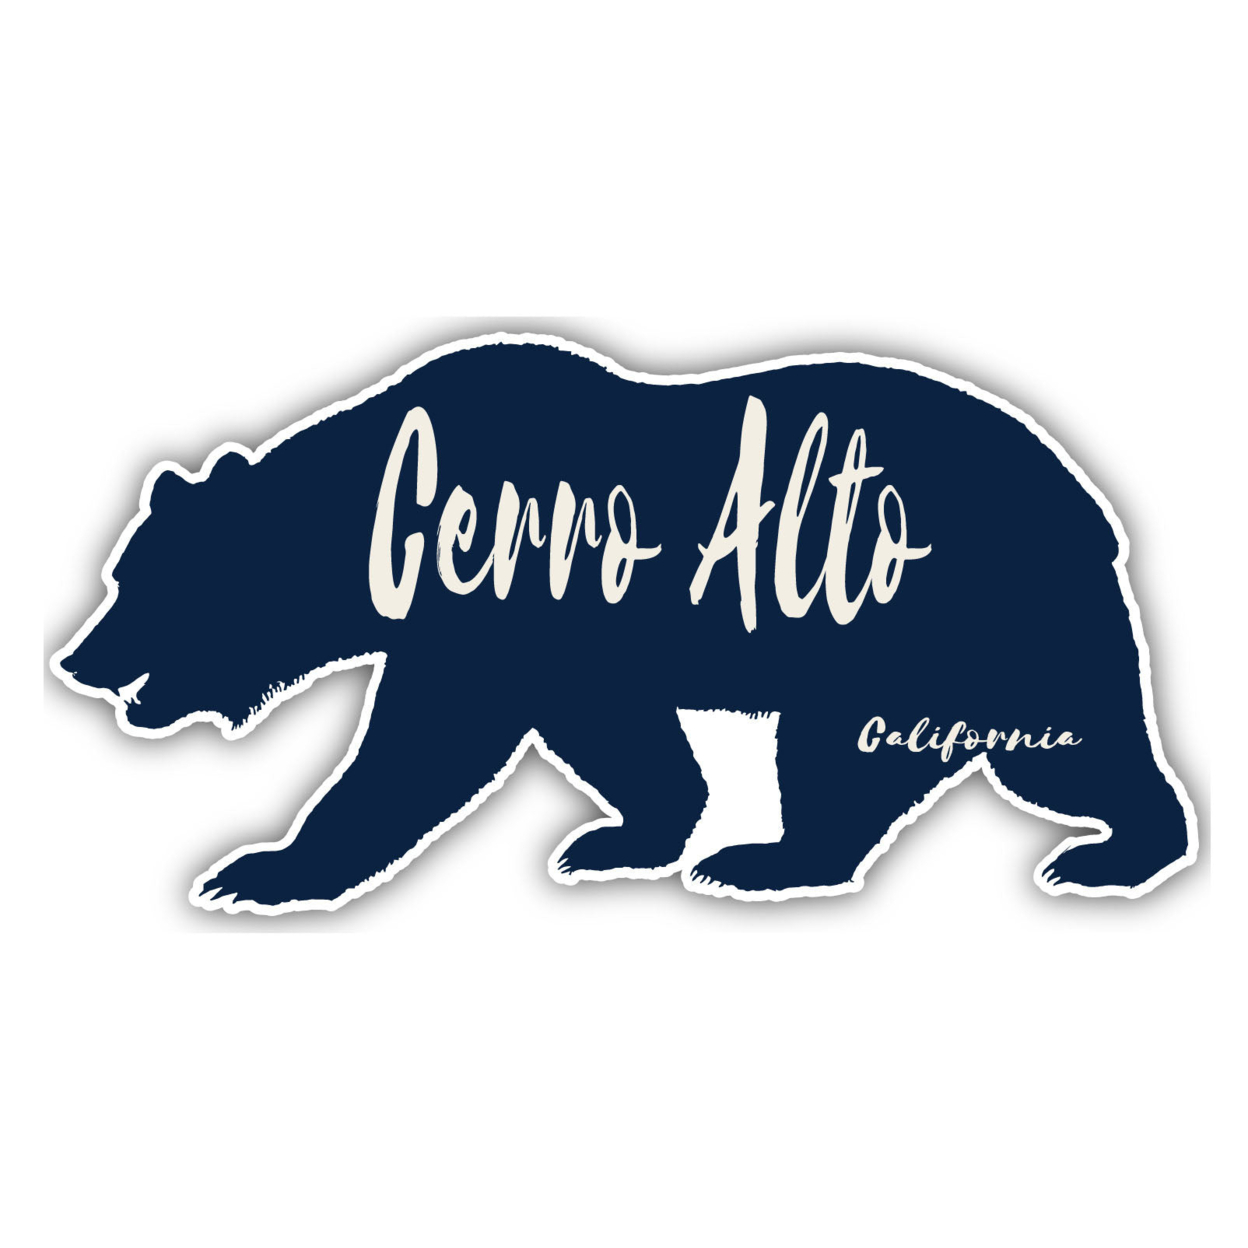 Cerro Alto California Souvenir Decorative Stickers (Choose Theme And Size) - 4-Pack, 10-Inch, Bear